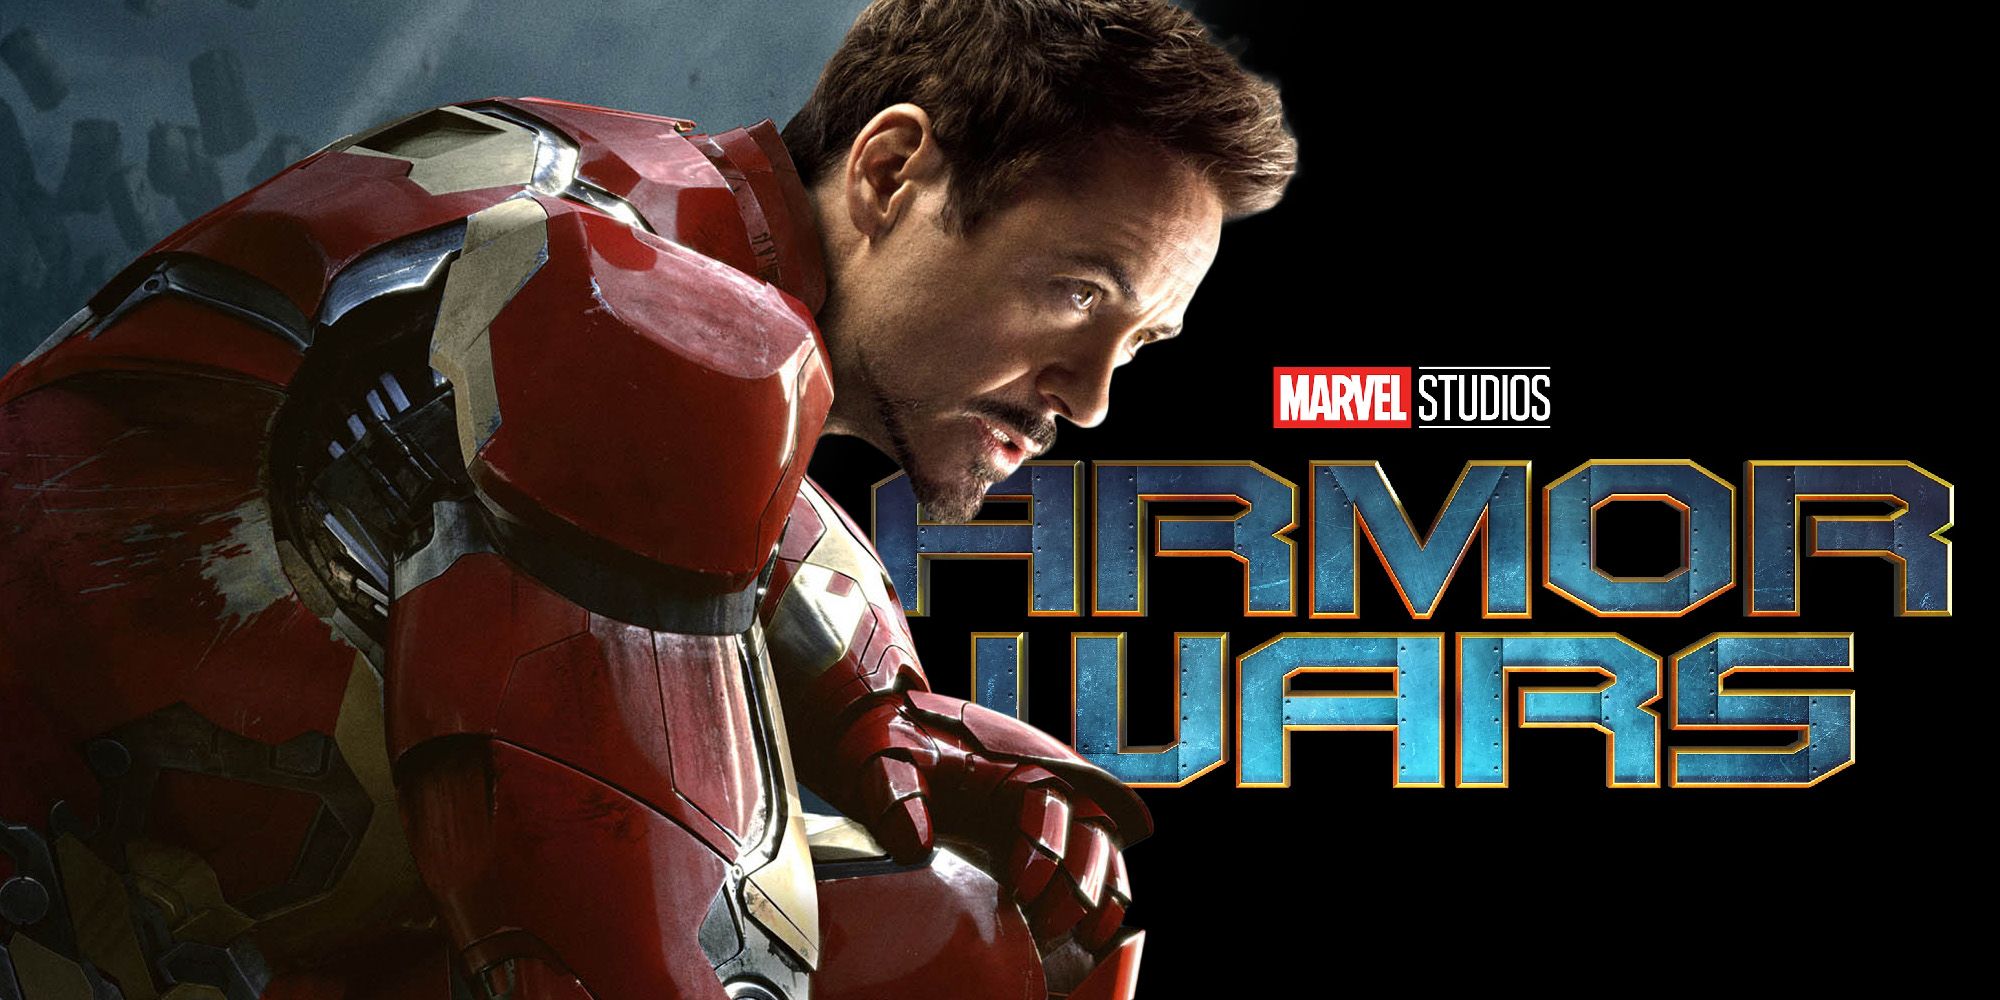 Iron man 3 tony stark Armor wars